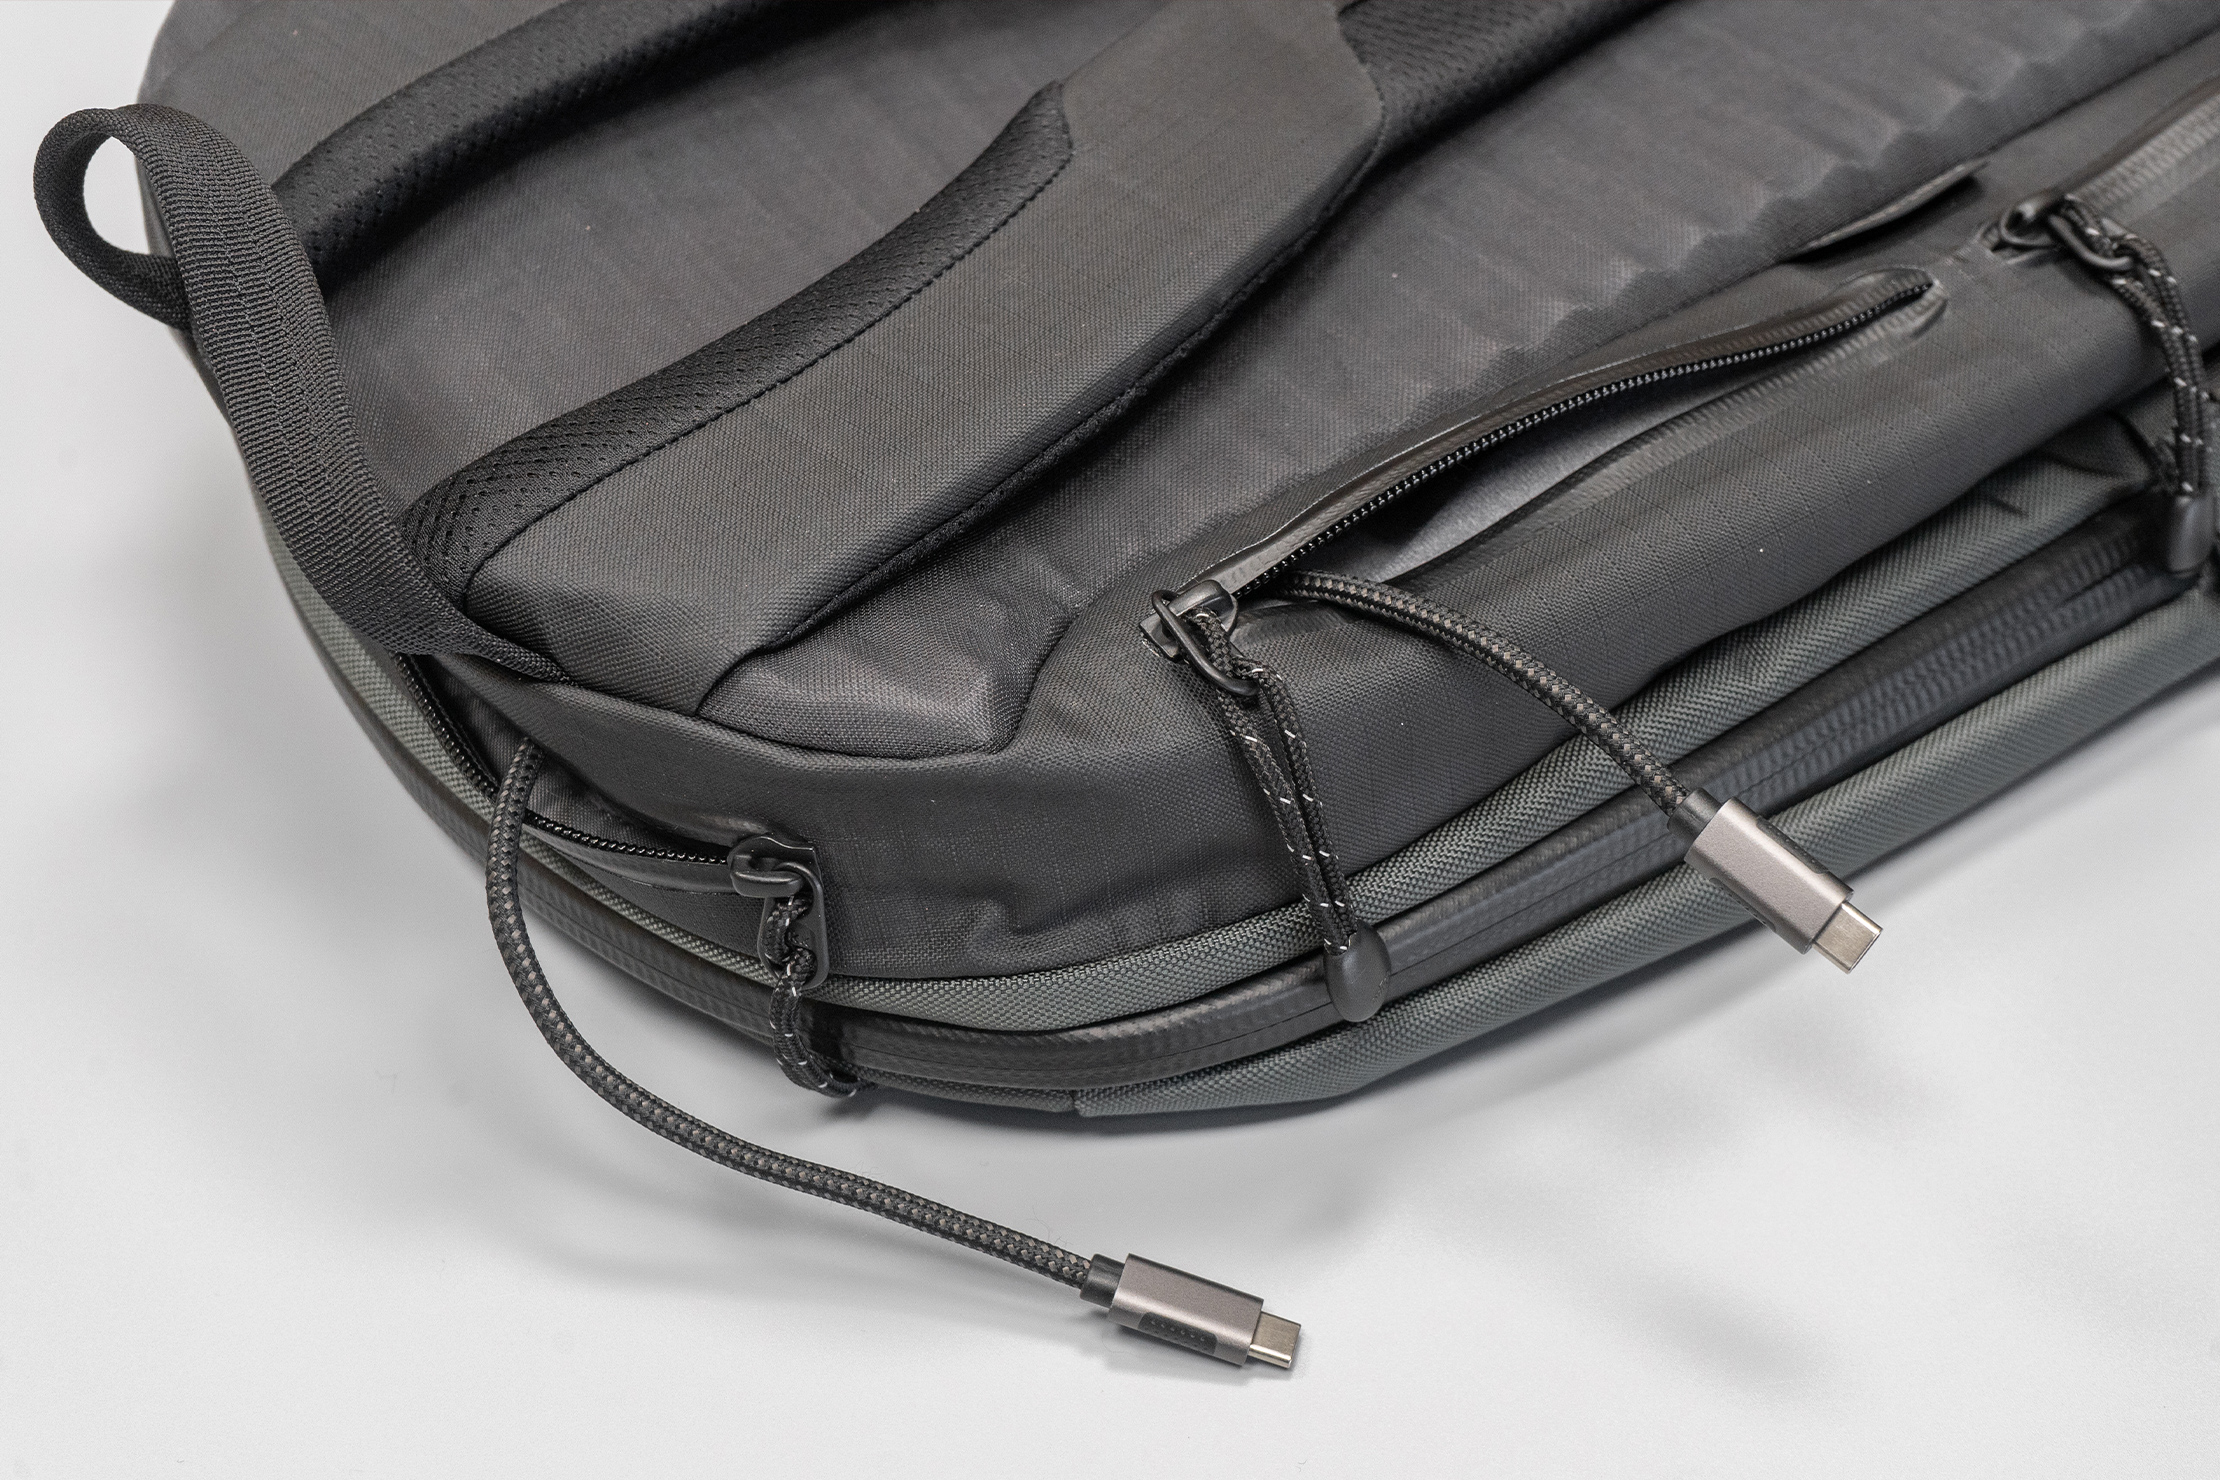 Lander Commuter Backpack 25L | It’s a feature-rich commuter backpack